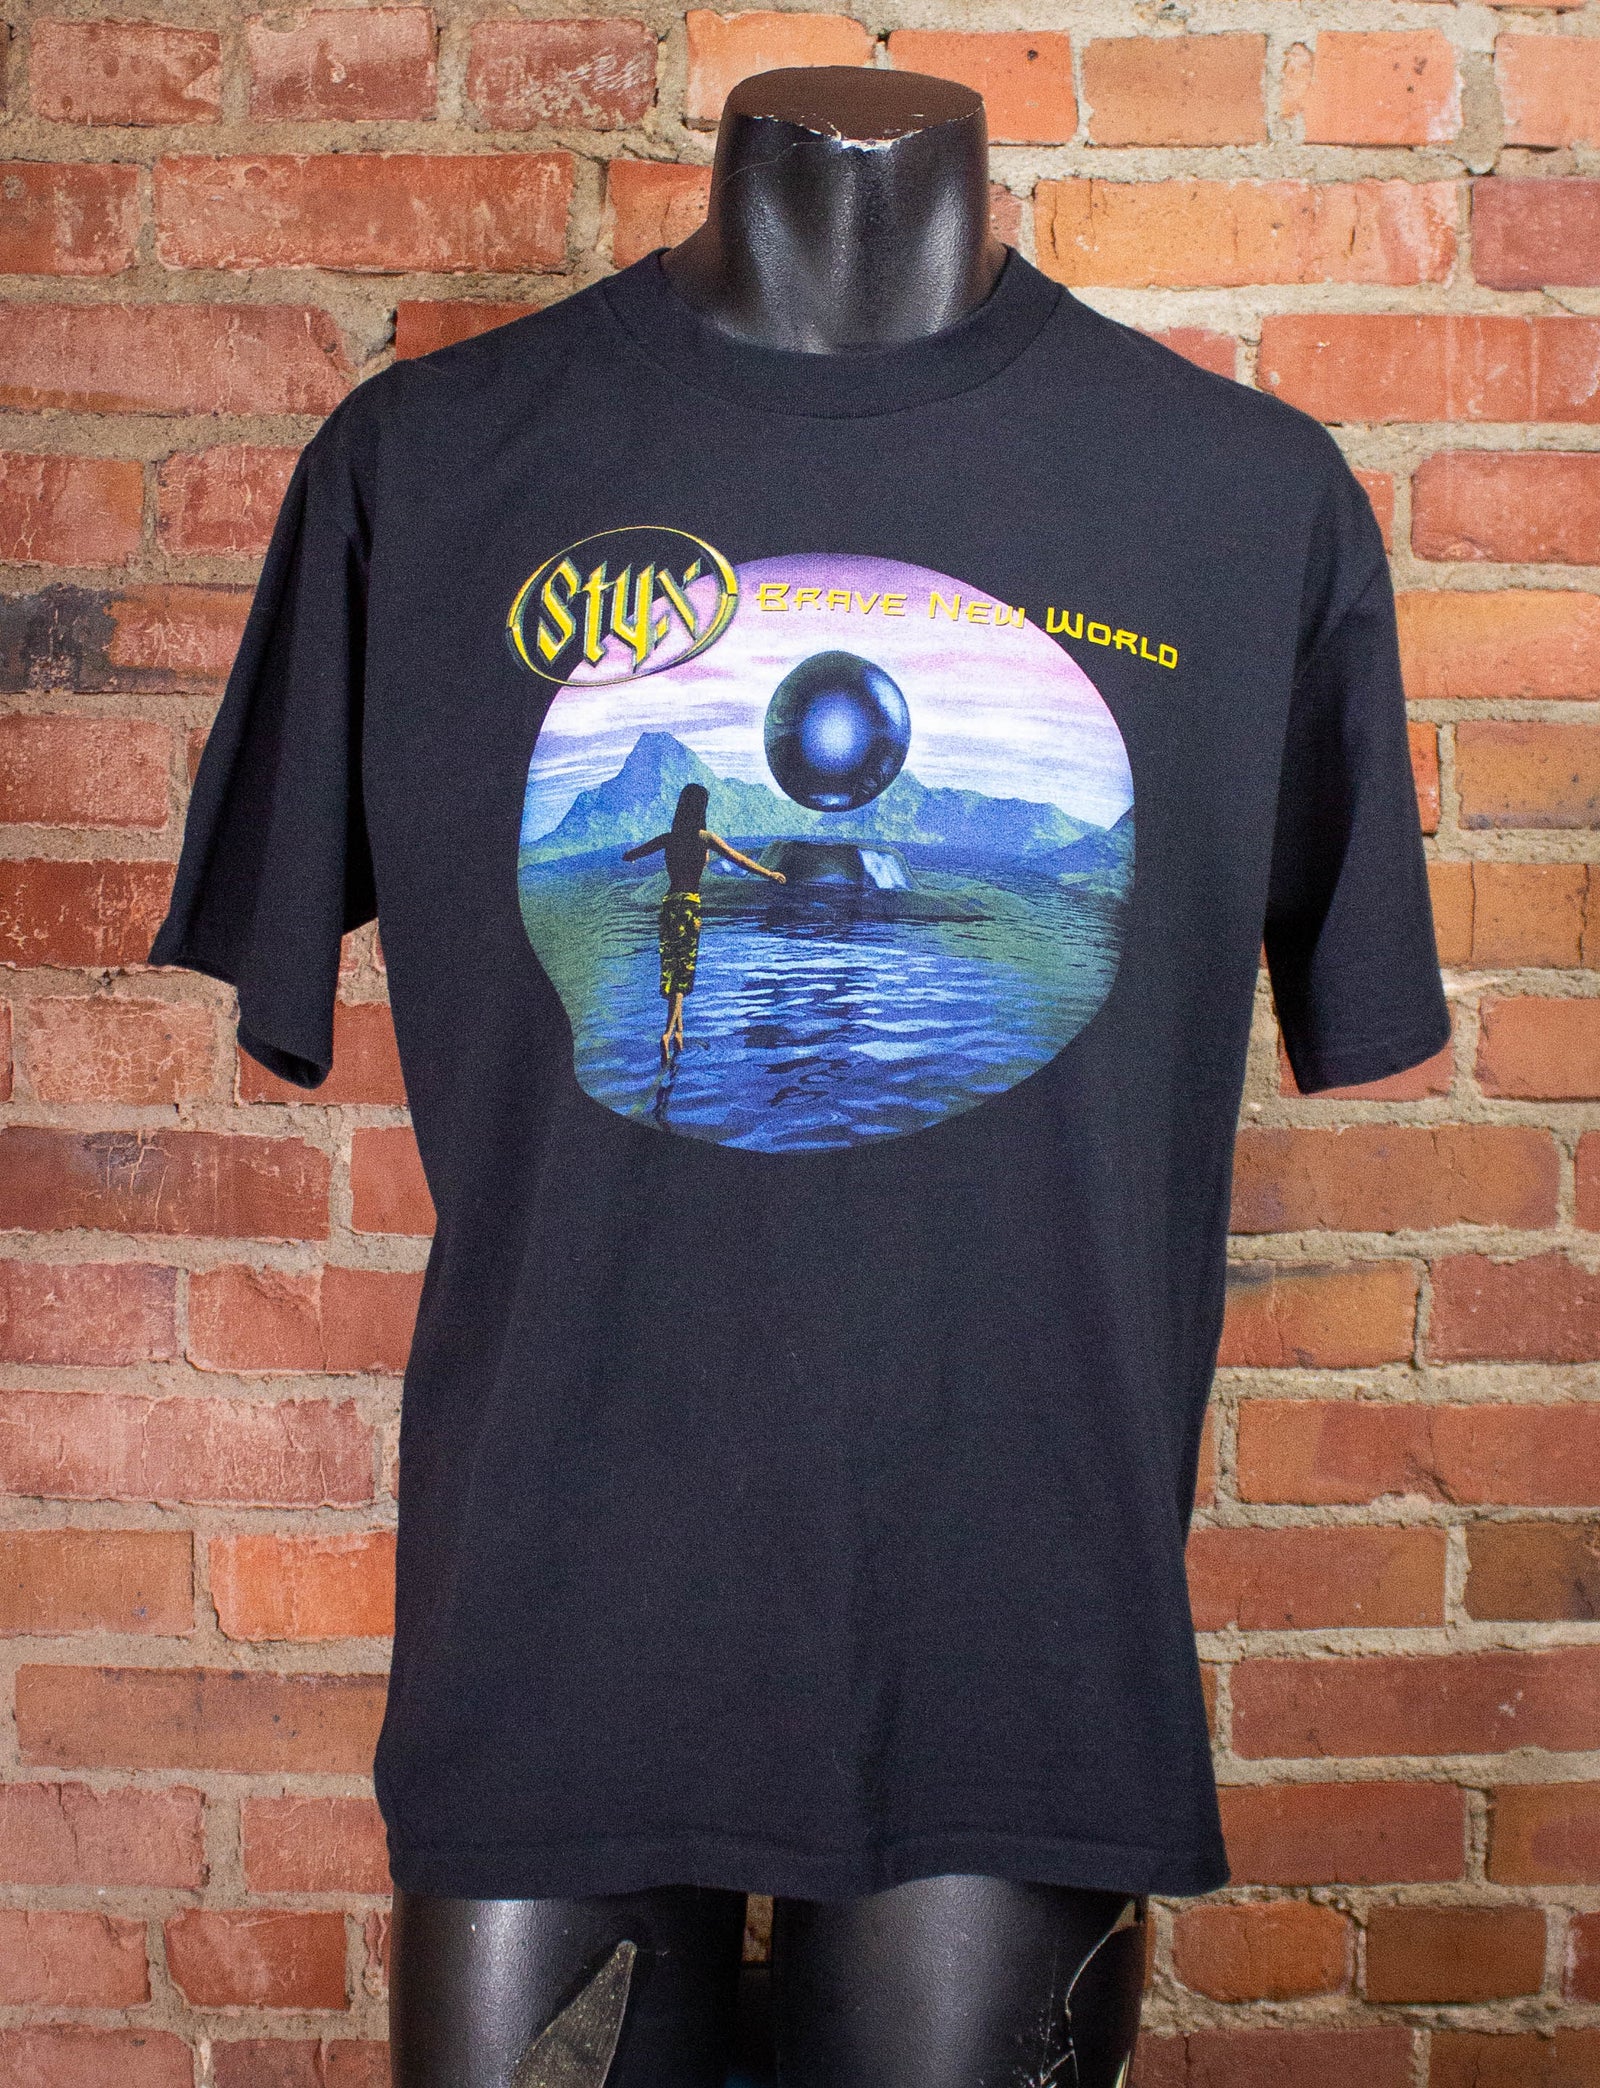 Vintage The Styx Brave New World World Tour Concert T-Shirt 2000 L